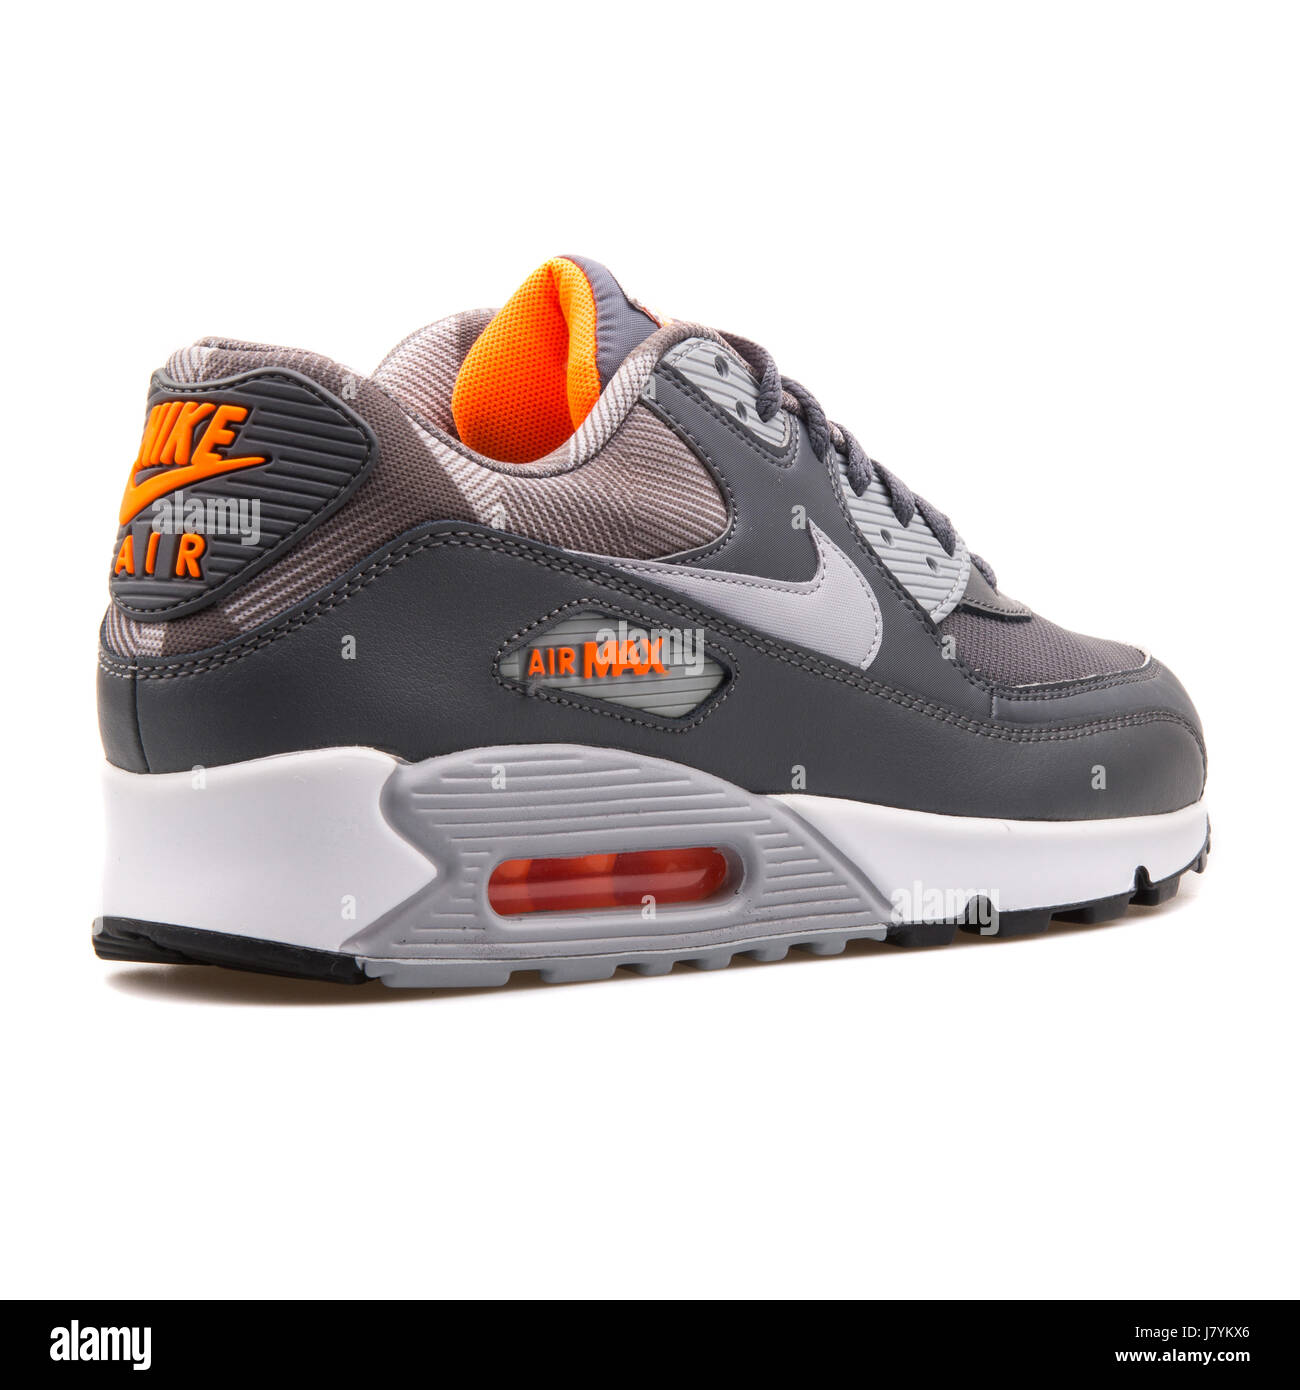 Nike Air Max 90 Blanc Orange Gris Impression Men's Running Sneakers -  749817-018 Photo Stock - Alamy